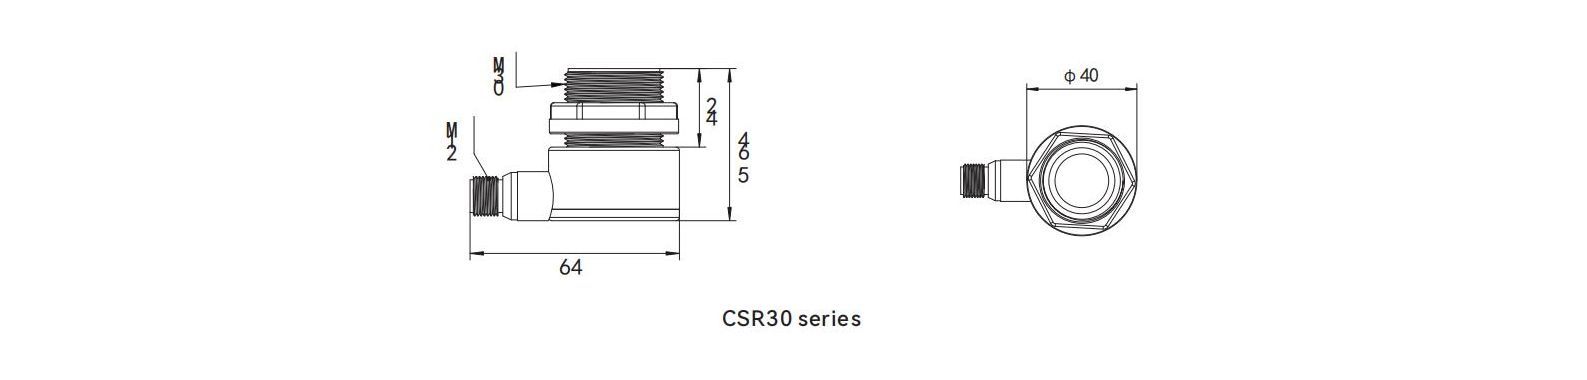 Dimensions of ultrasonic level measurement CSR30 series